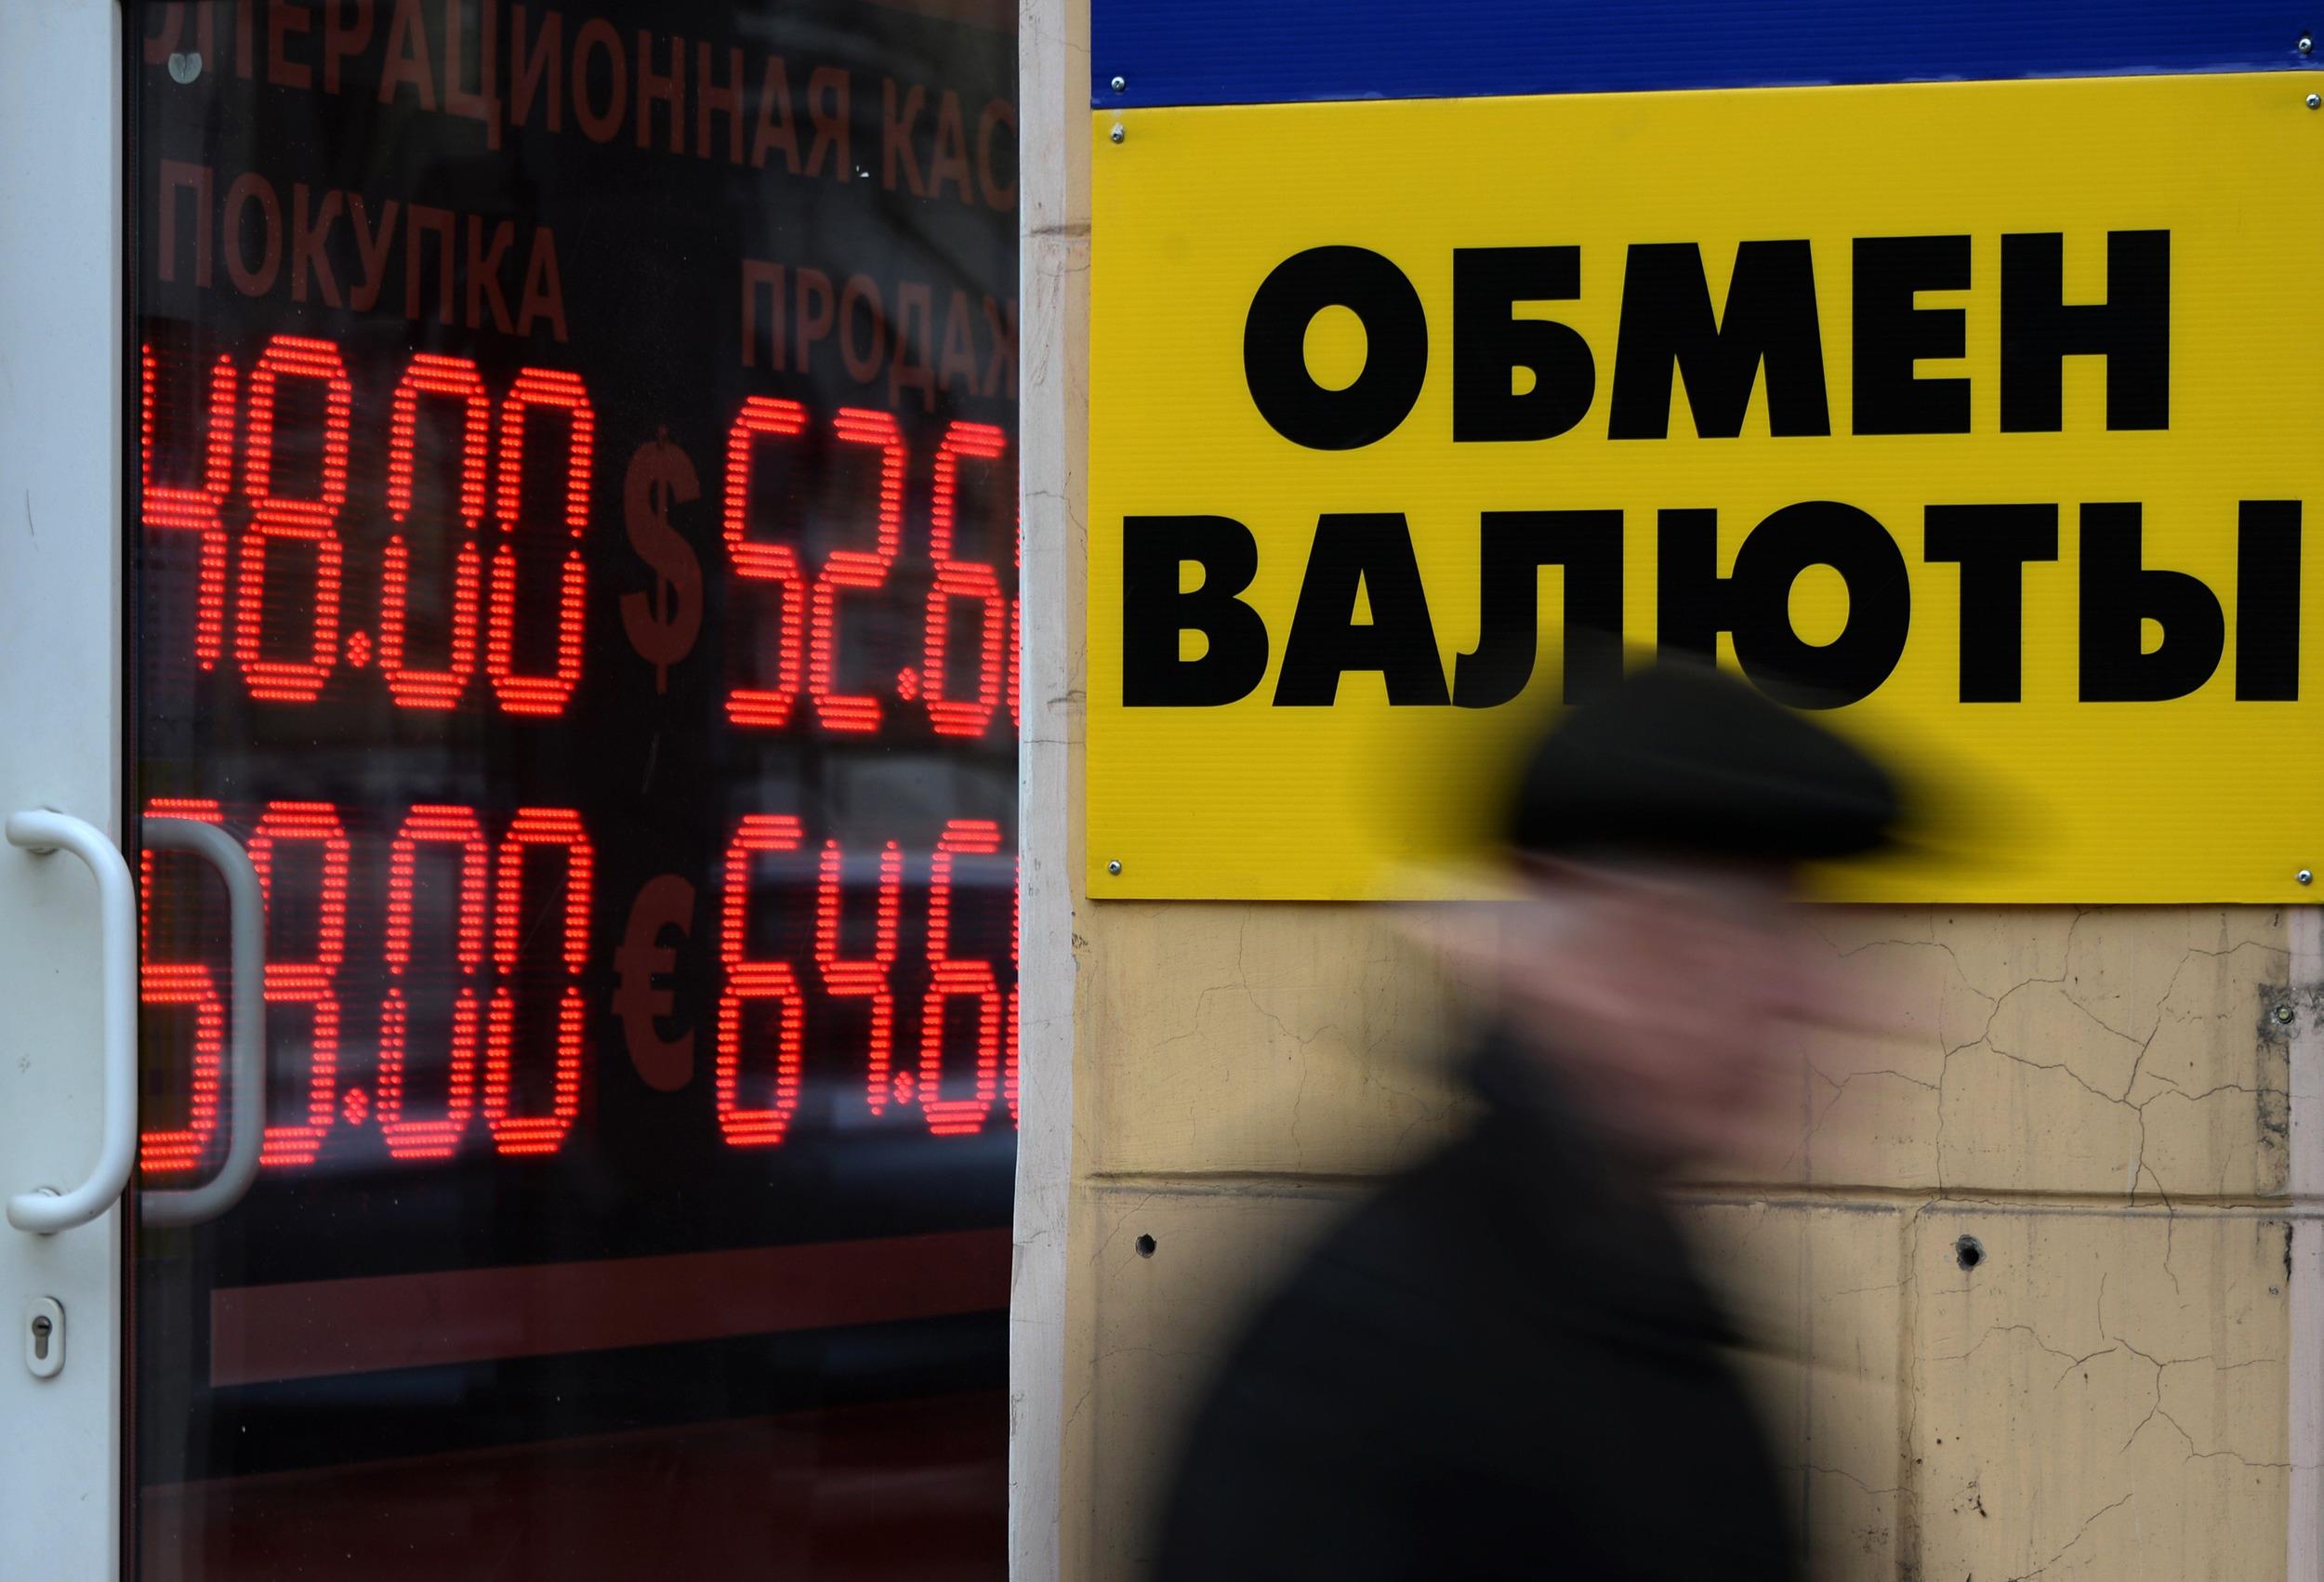 https://energysquared.files.wordpress.com/2015/01/2-russia-recession.jpg